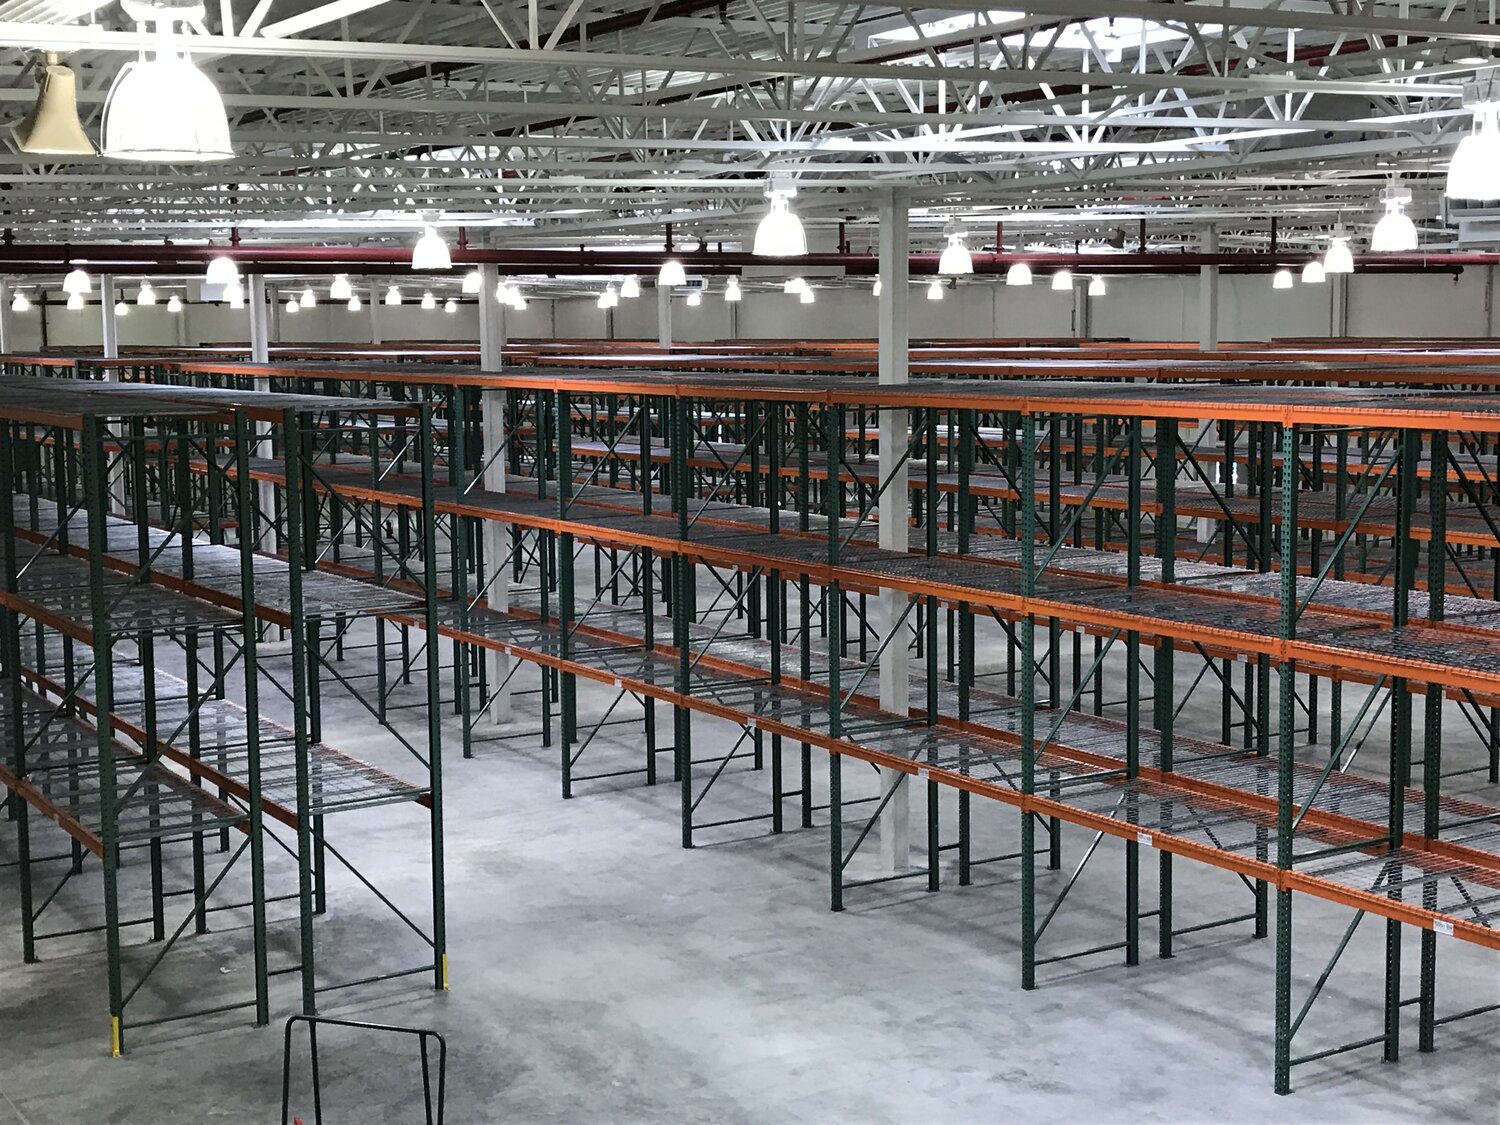 Warehouse Racking Systems, Pallet Racks